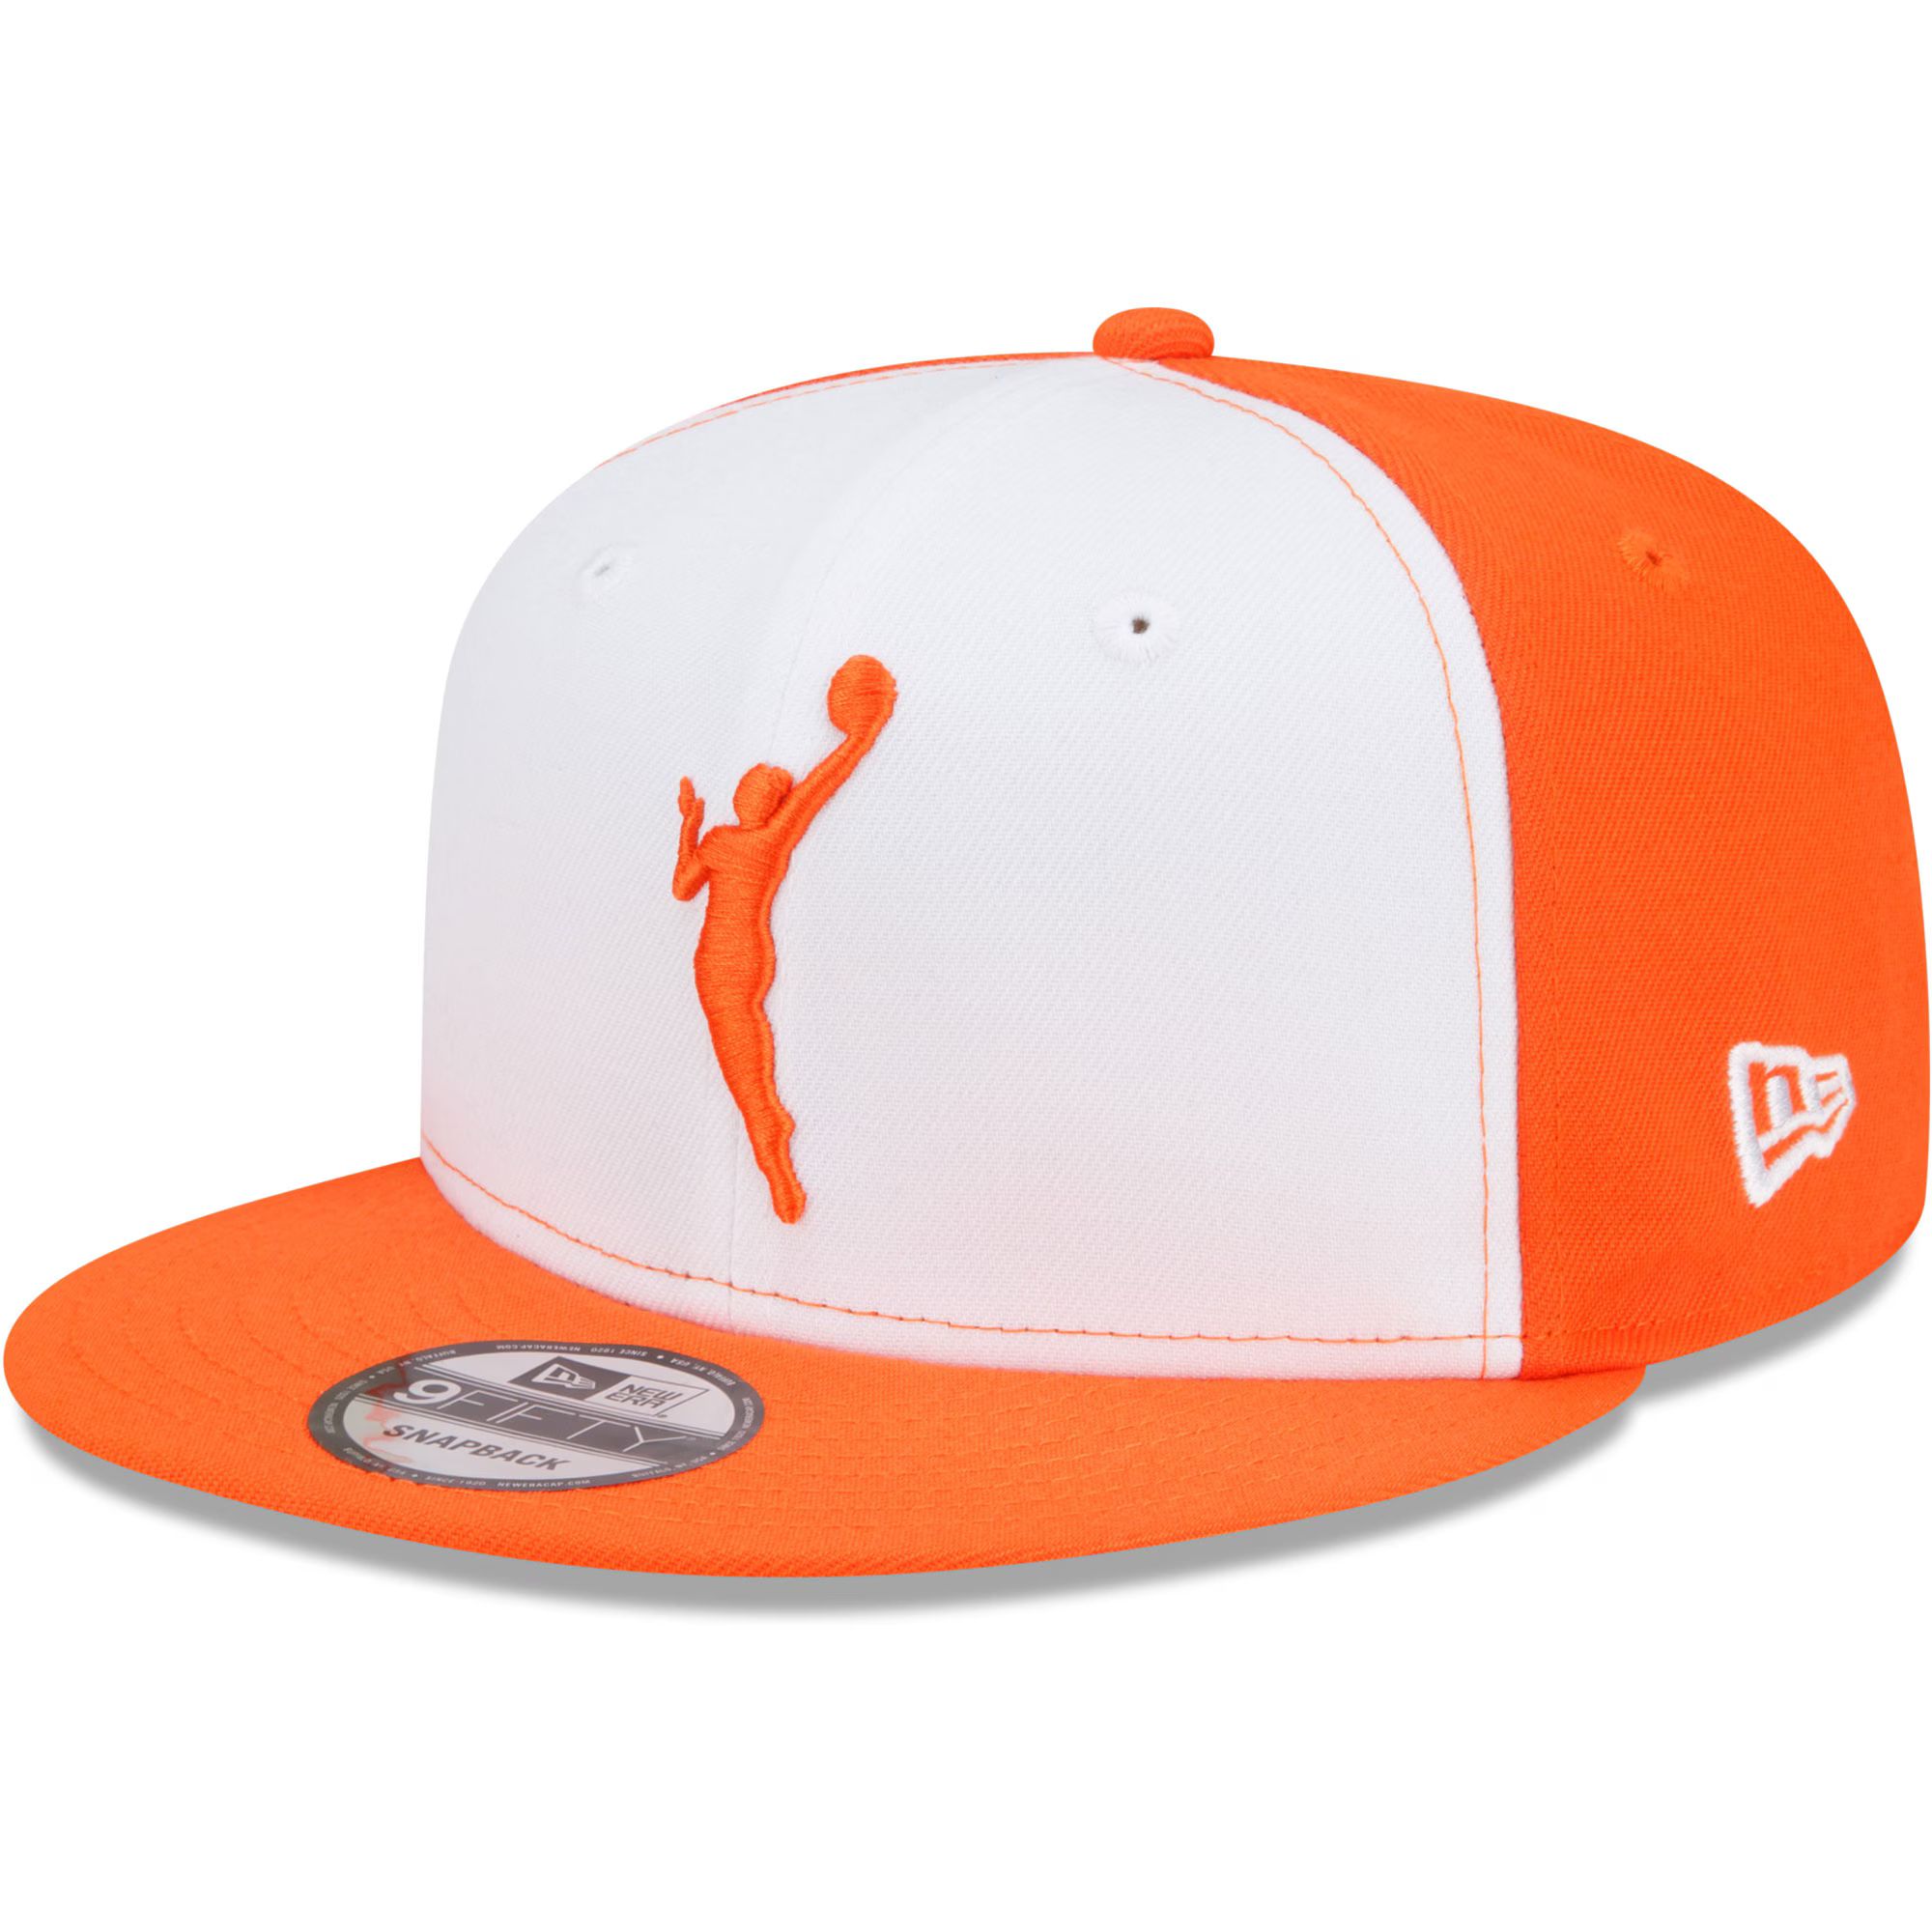 WNBA Logowoman New Era 2022 Draft 9FIFTY Snapback Hat - White/Orange | Fanatics